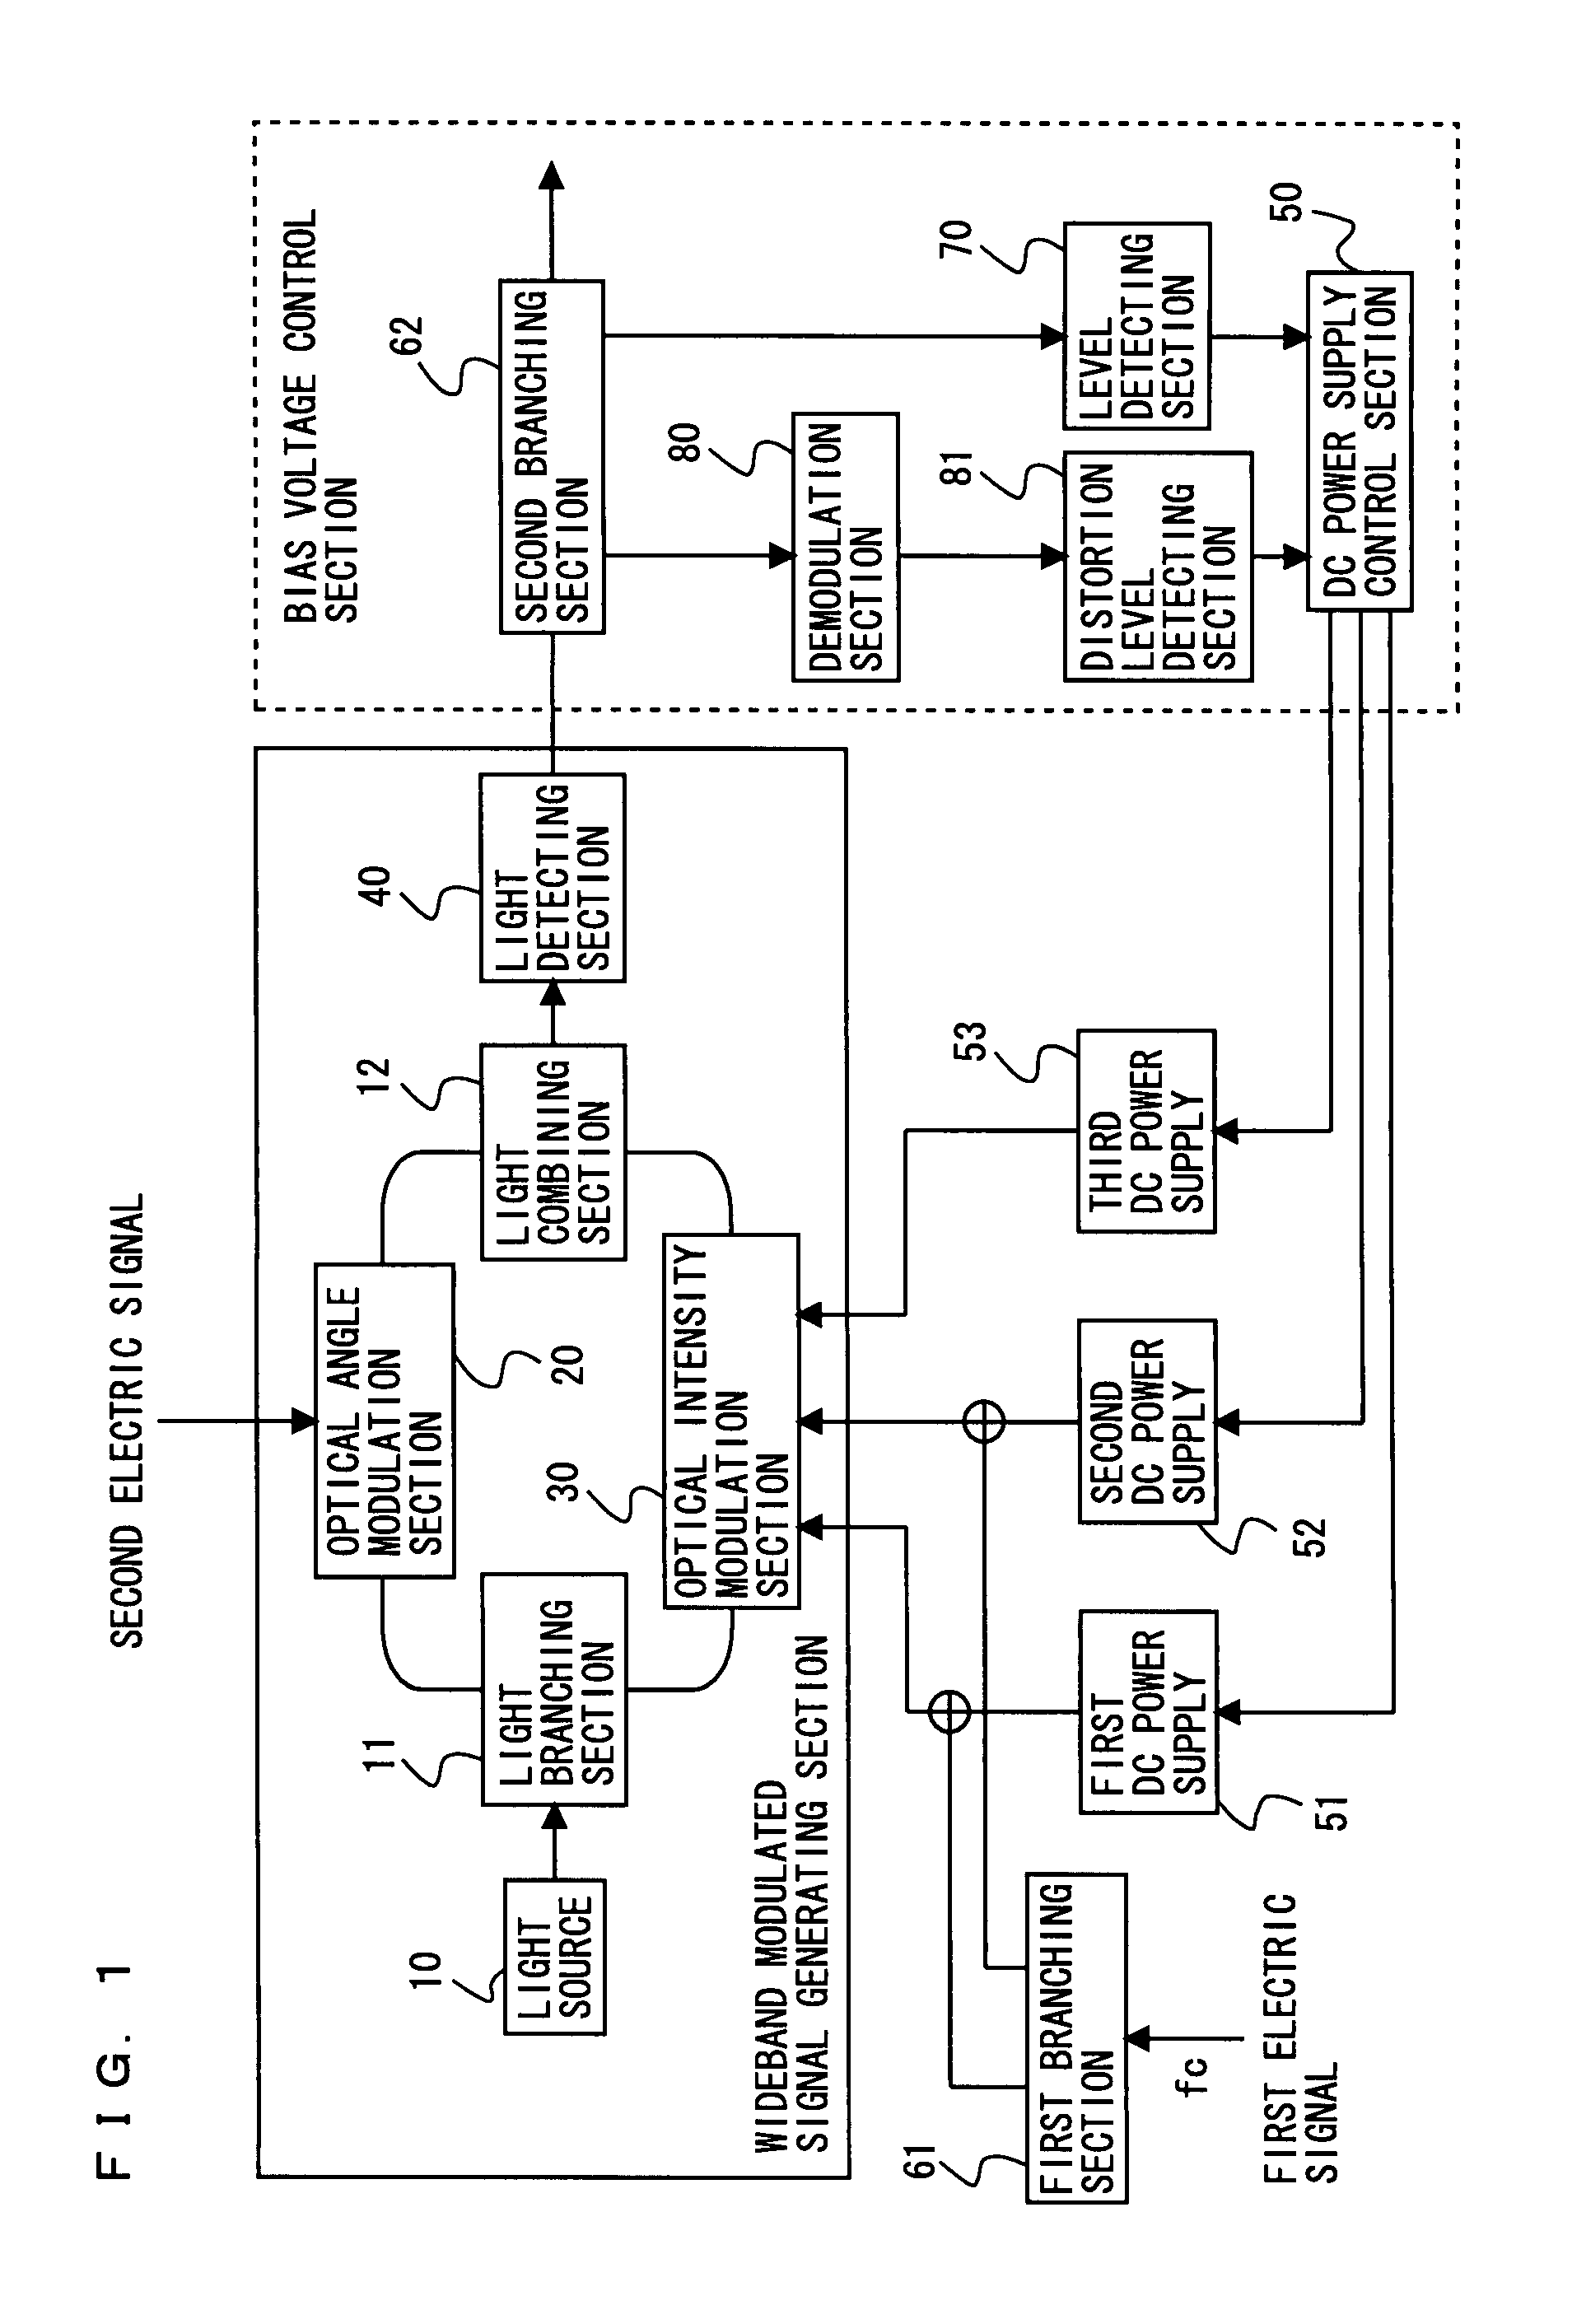 Wideband modulated signal generating device